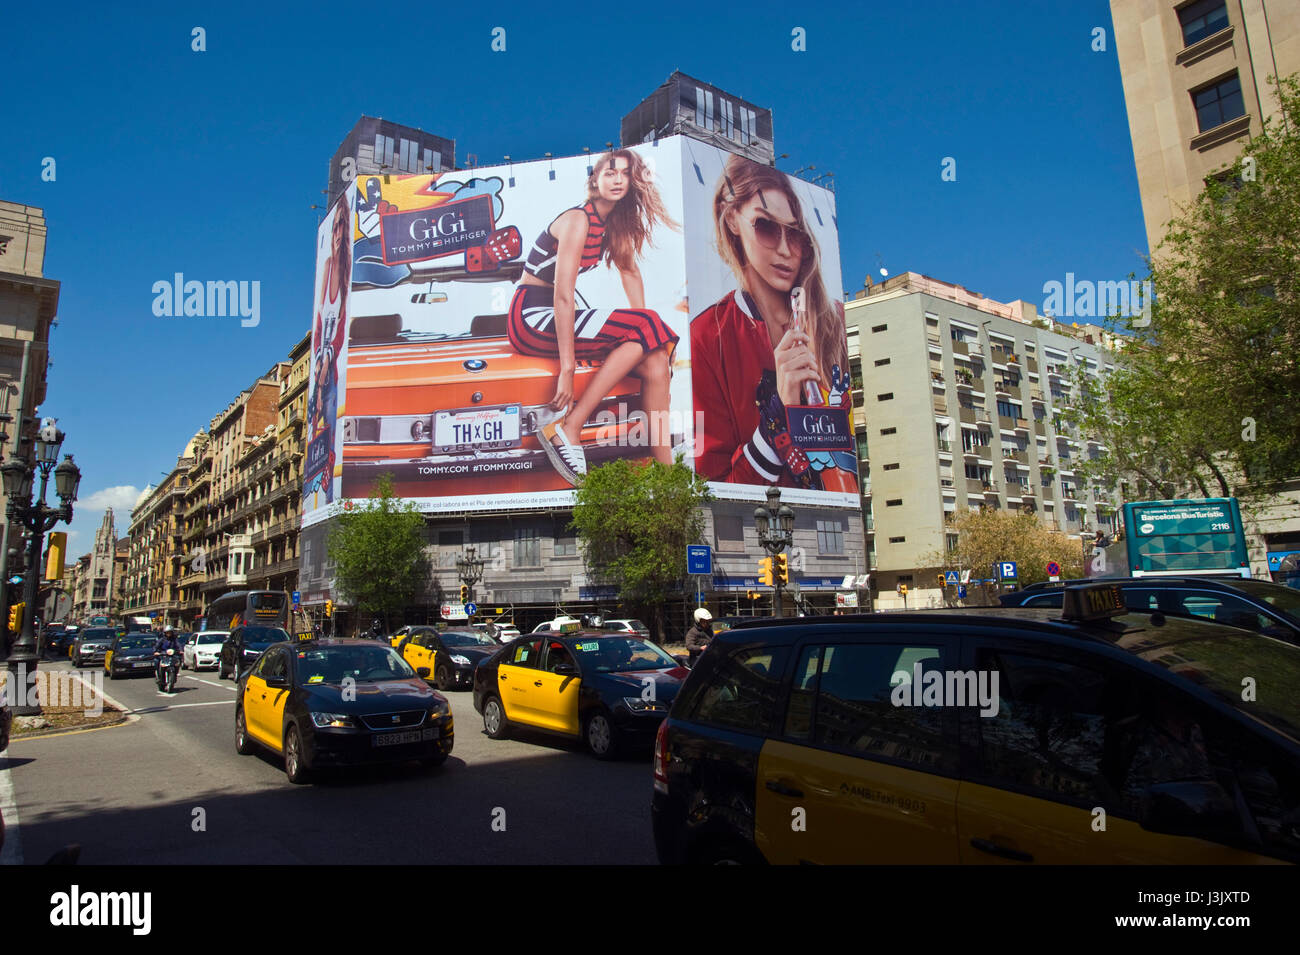 rechazo invadir por qué Spain Billboard High Resolution Stock Photography and Images - Alamy